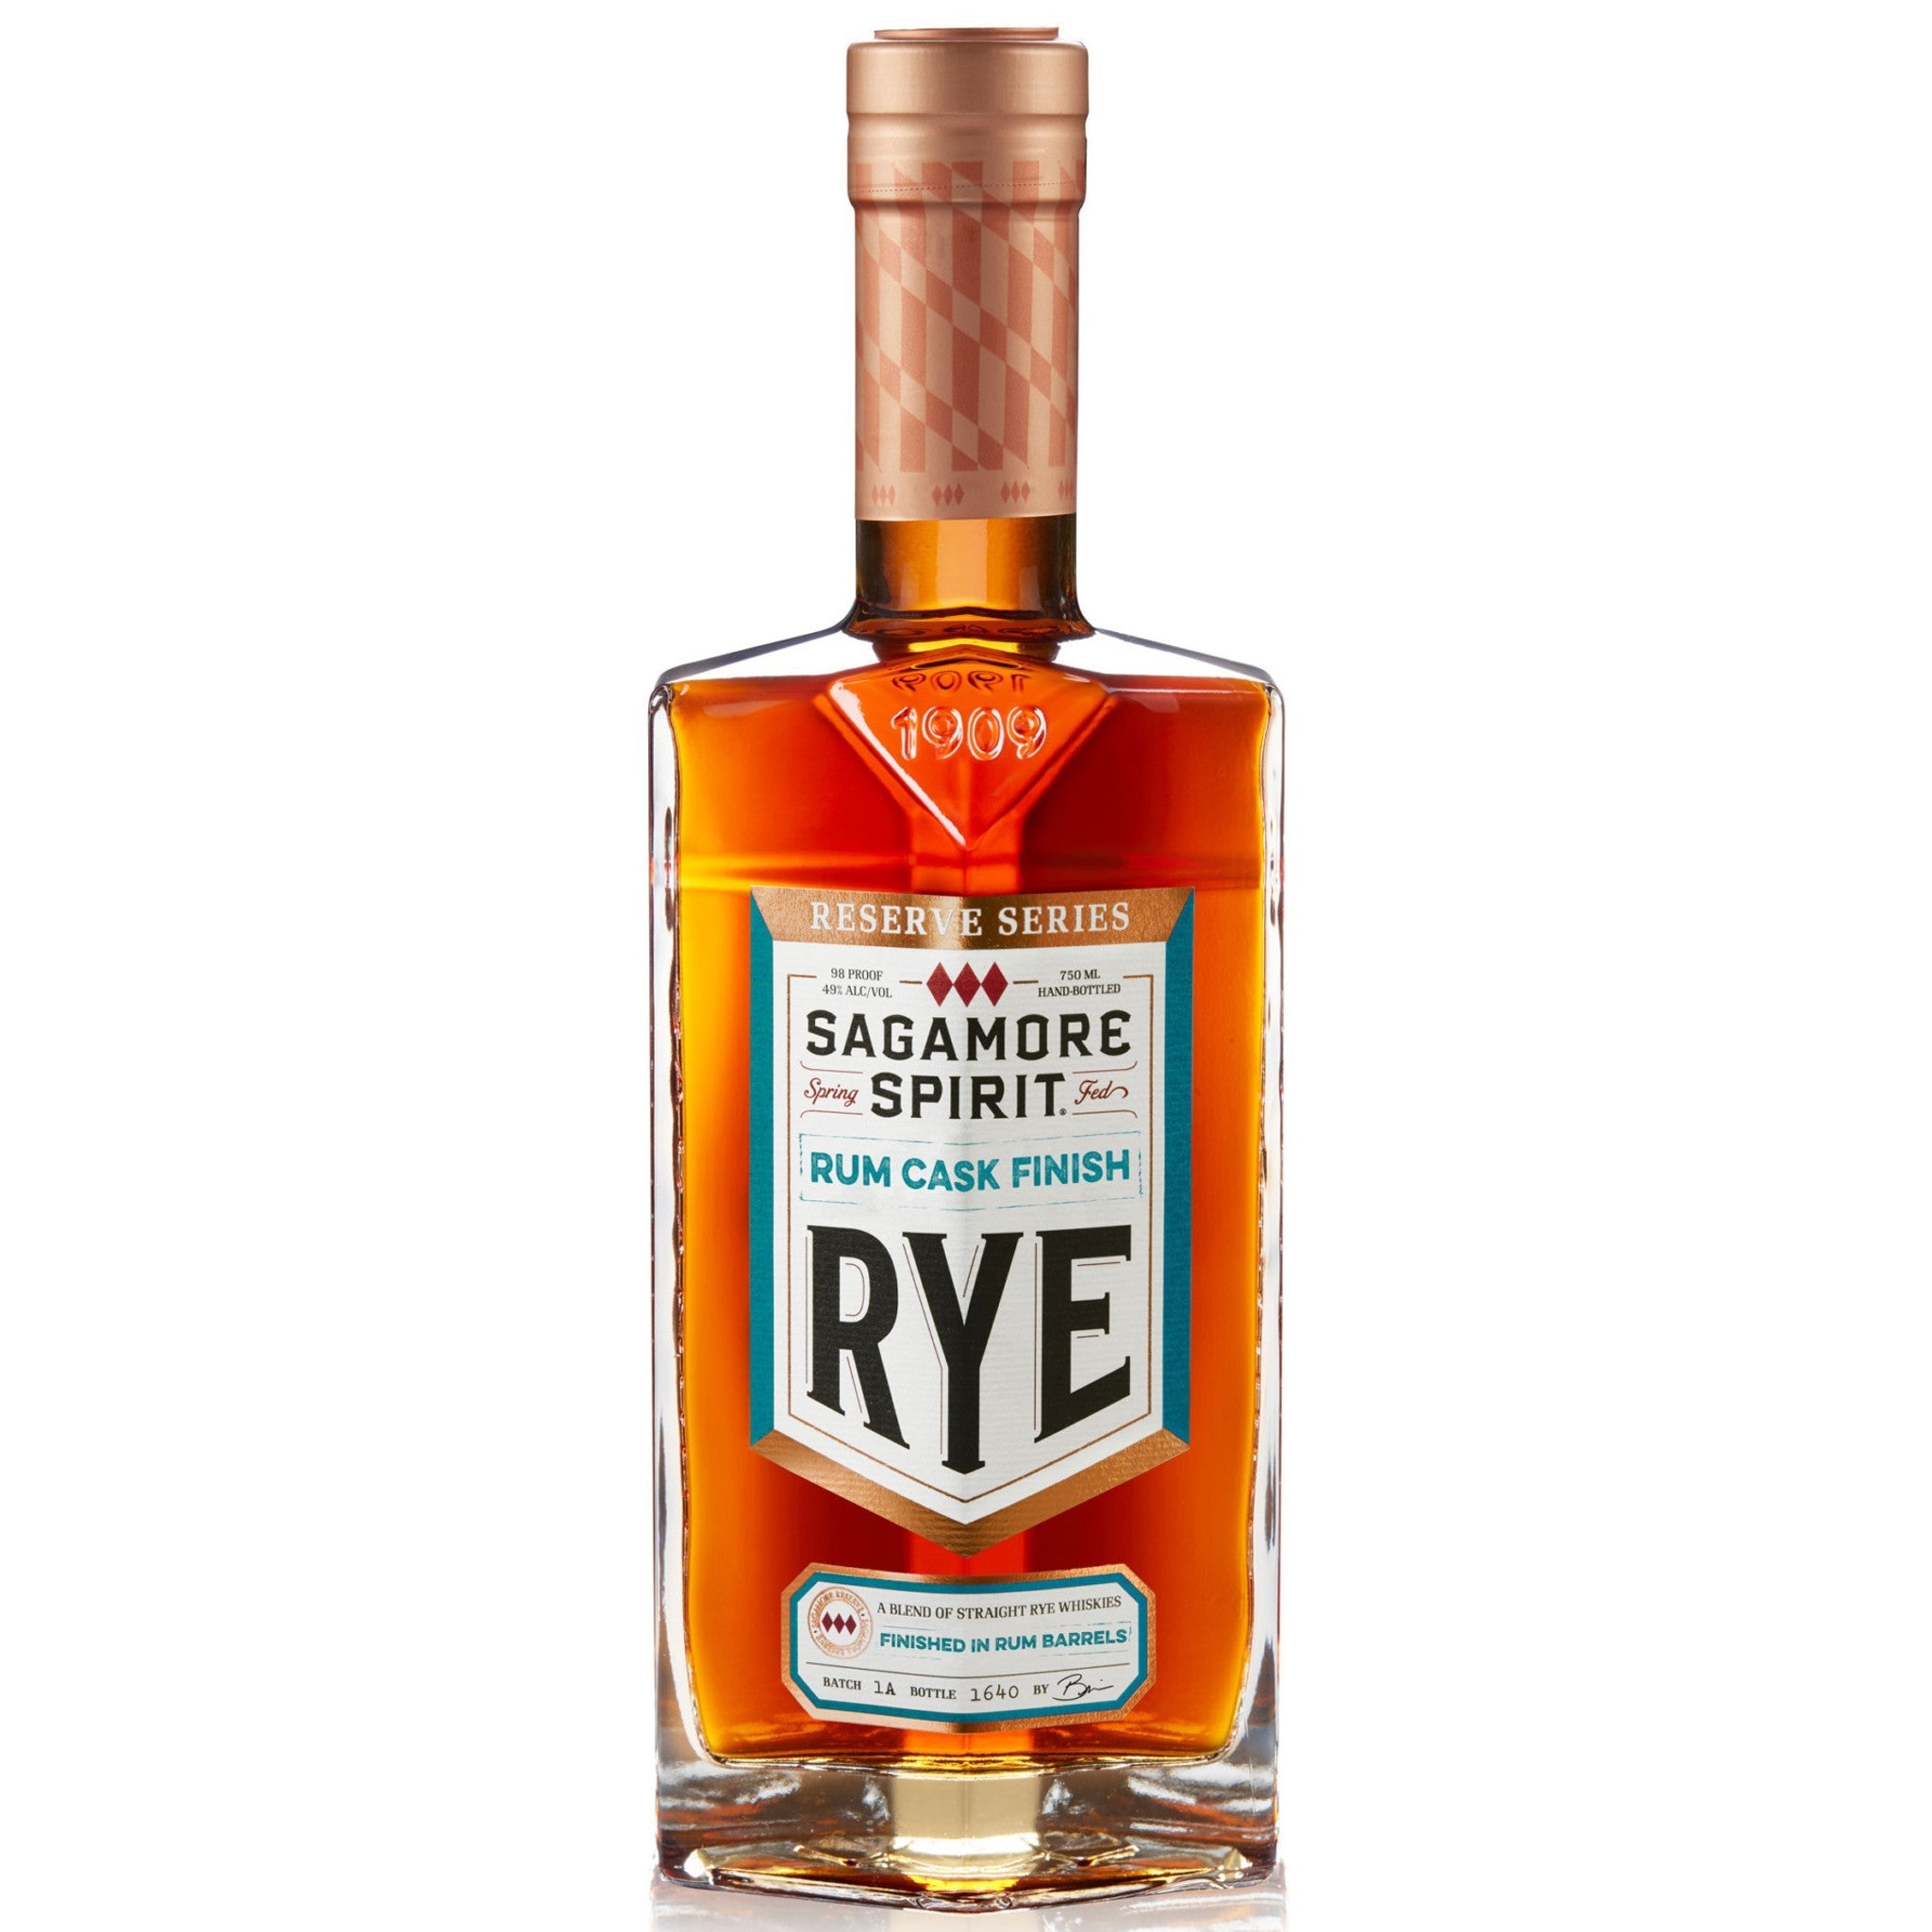 Sagamore Spirit Reserve Series - Rum Cask Finish Rye Whiskey (750ml)